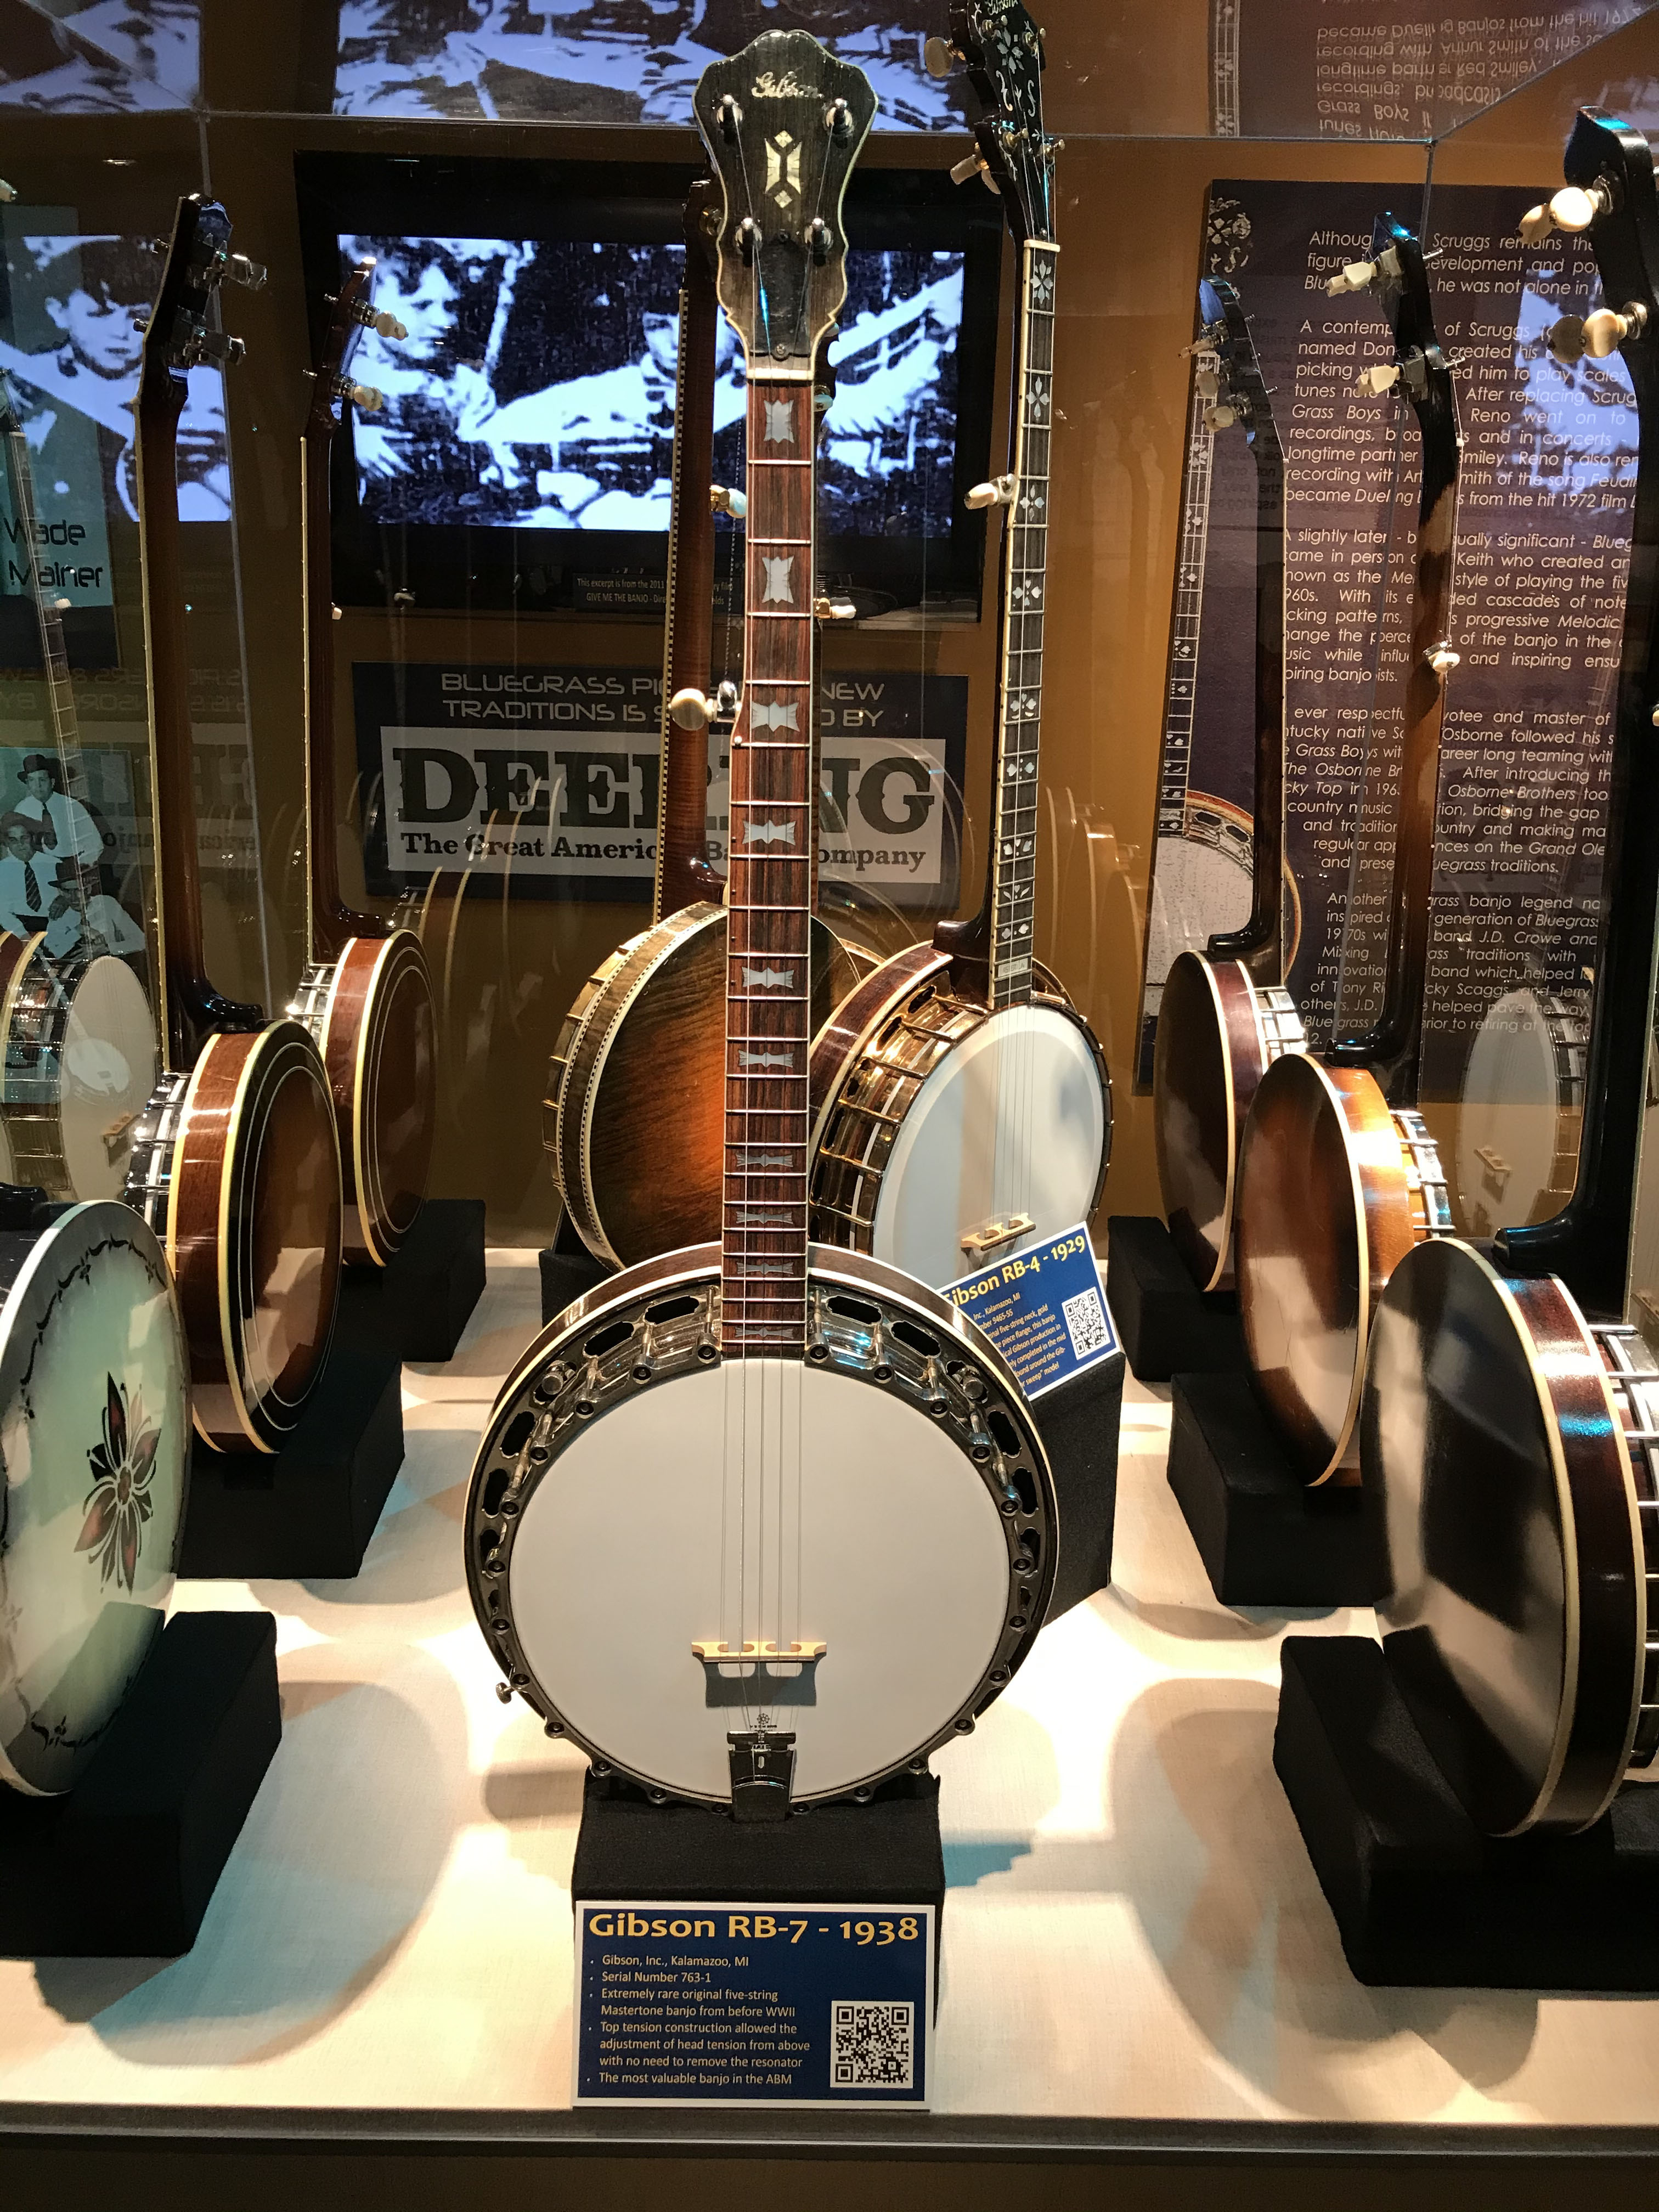 American Banjo Museum - Oklahoma City